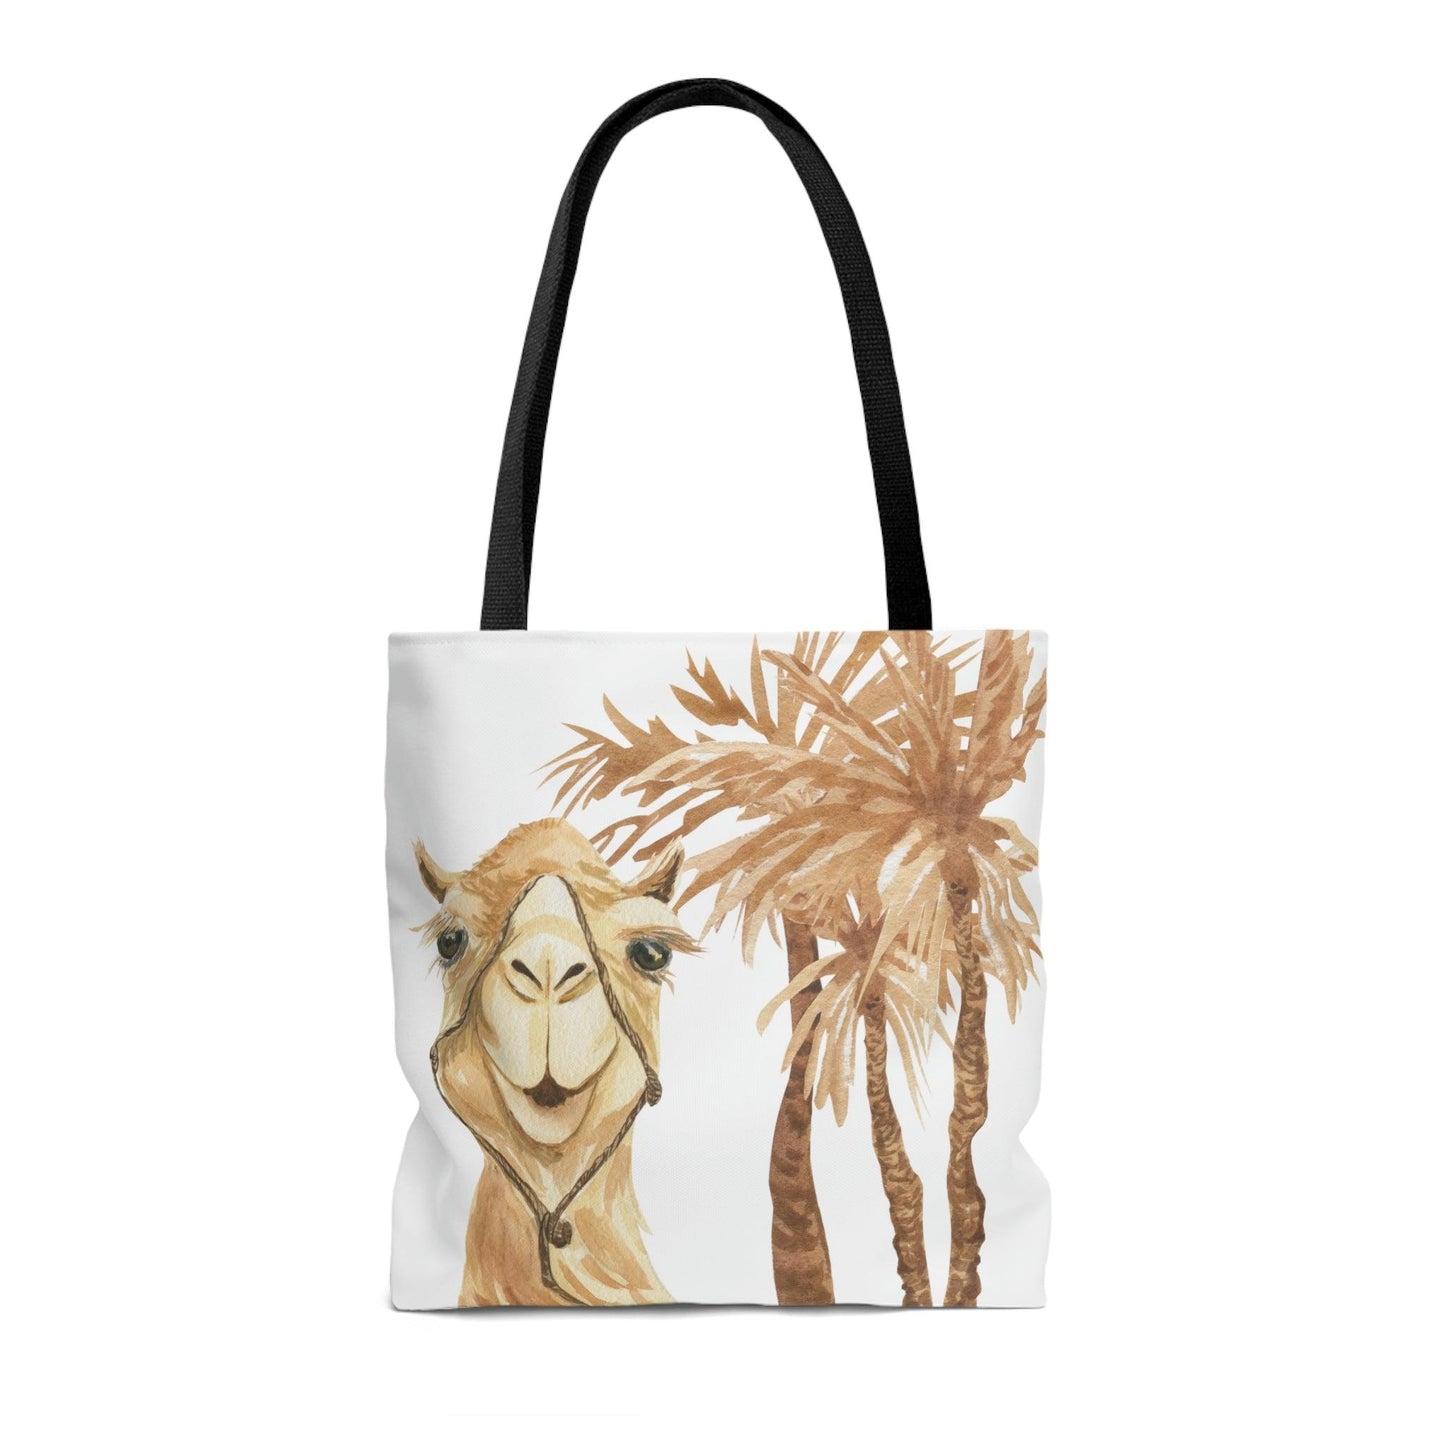 Moroccan Desert Camel Tote Bag - The Global Wanderer